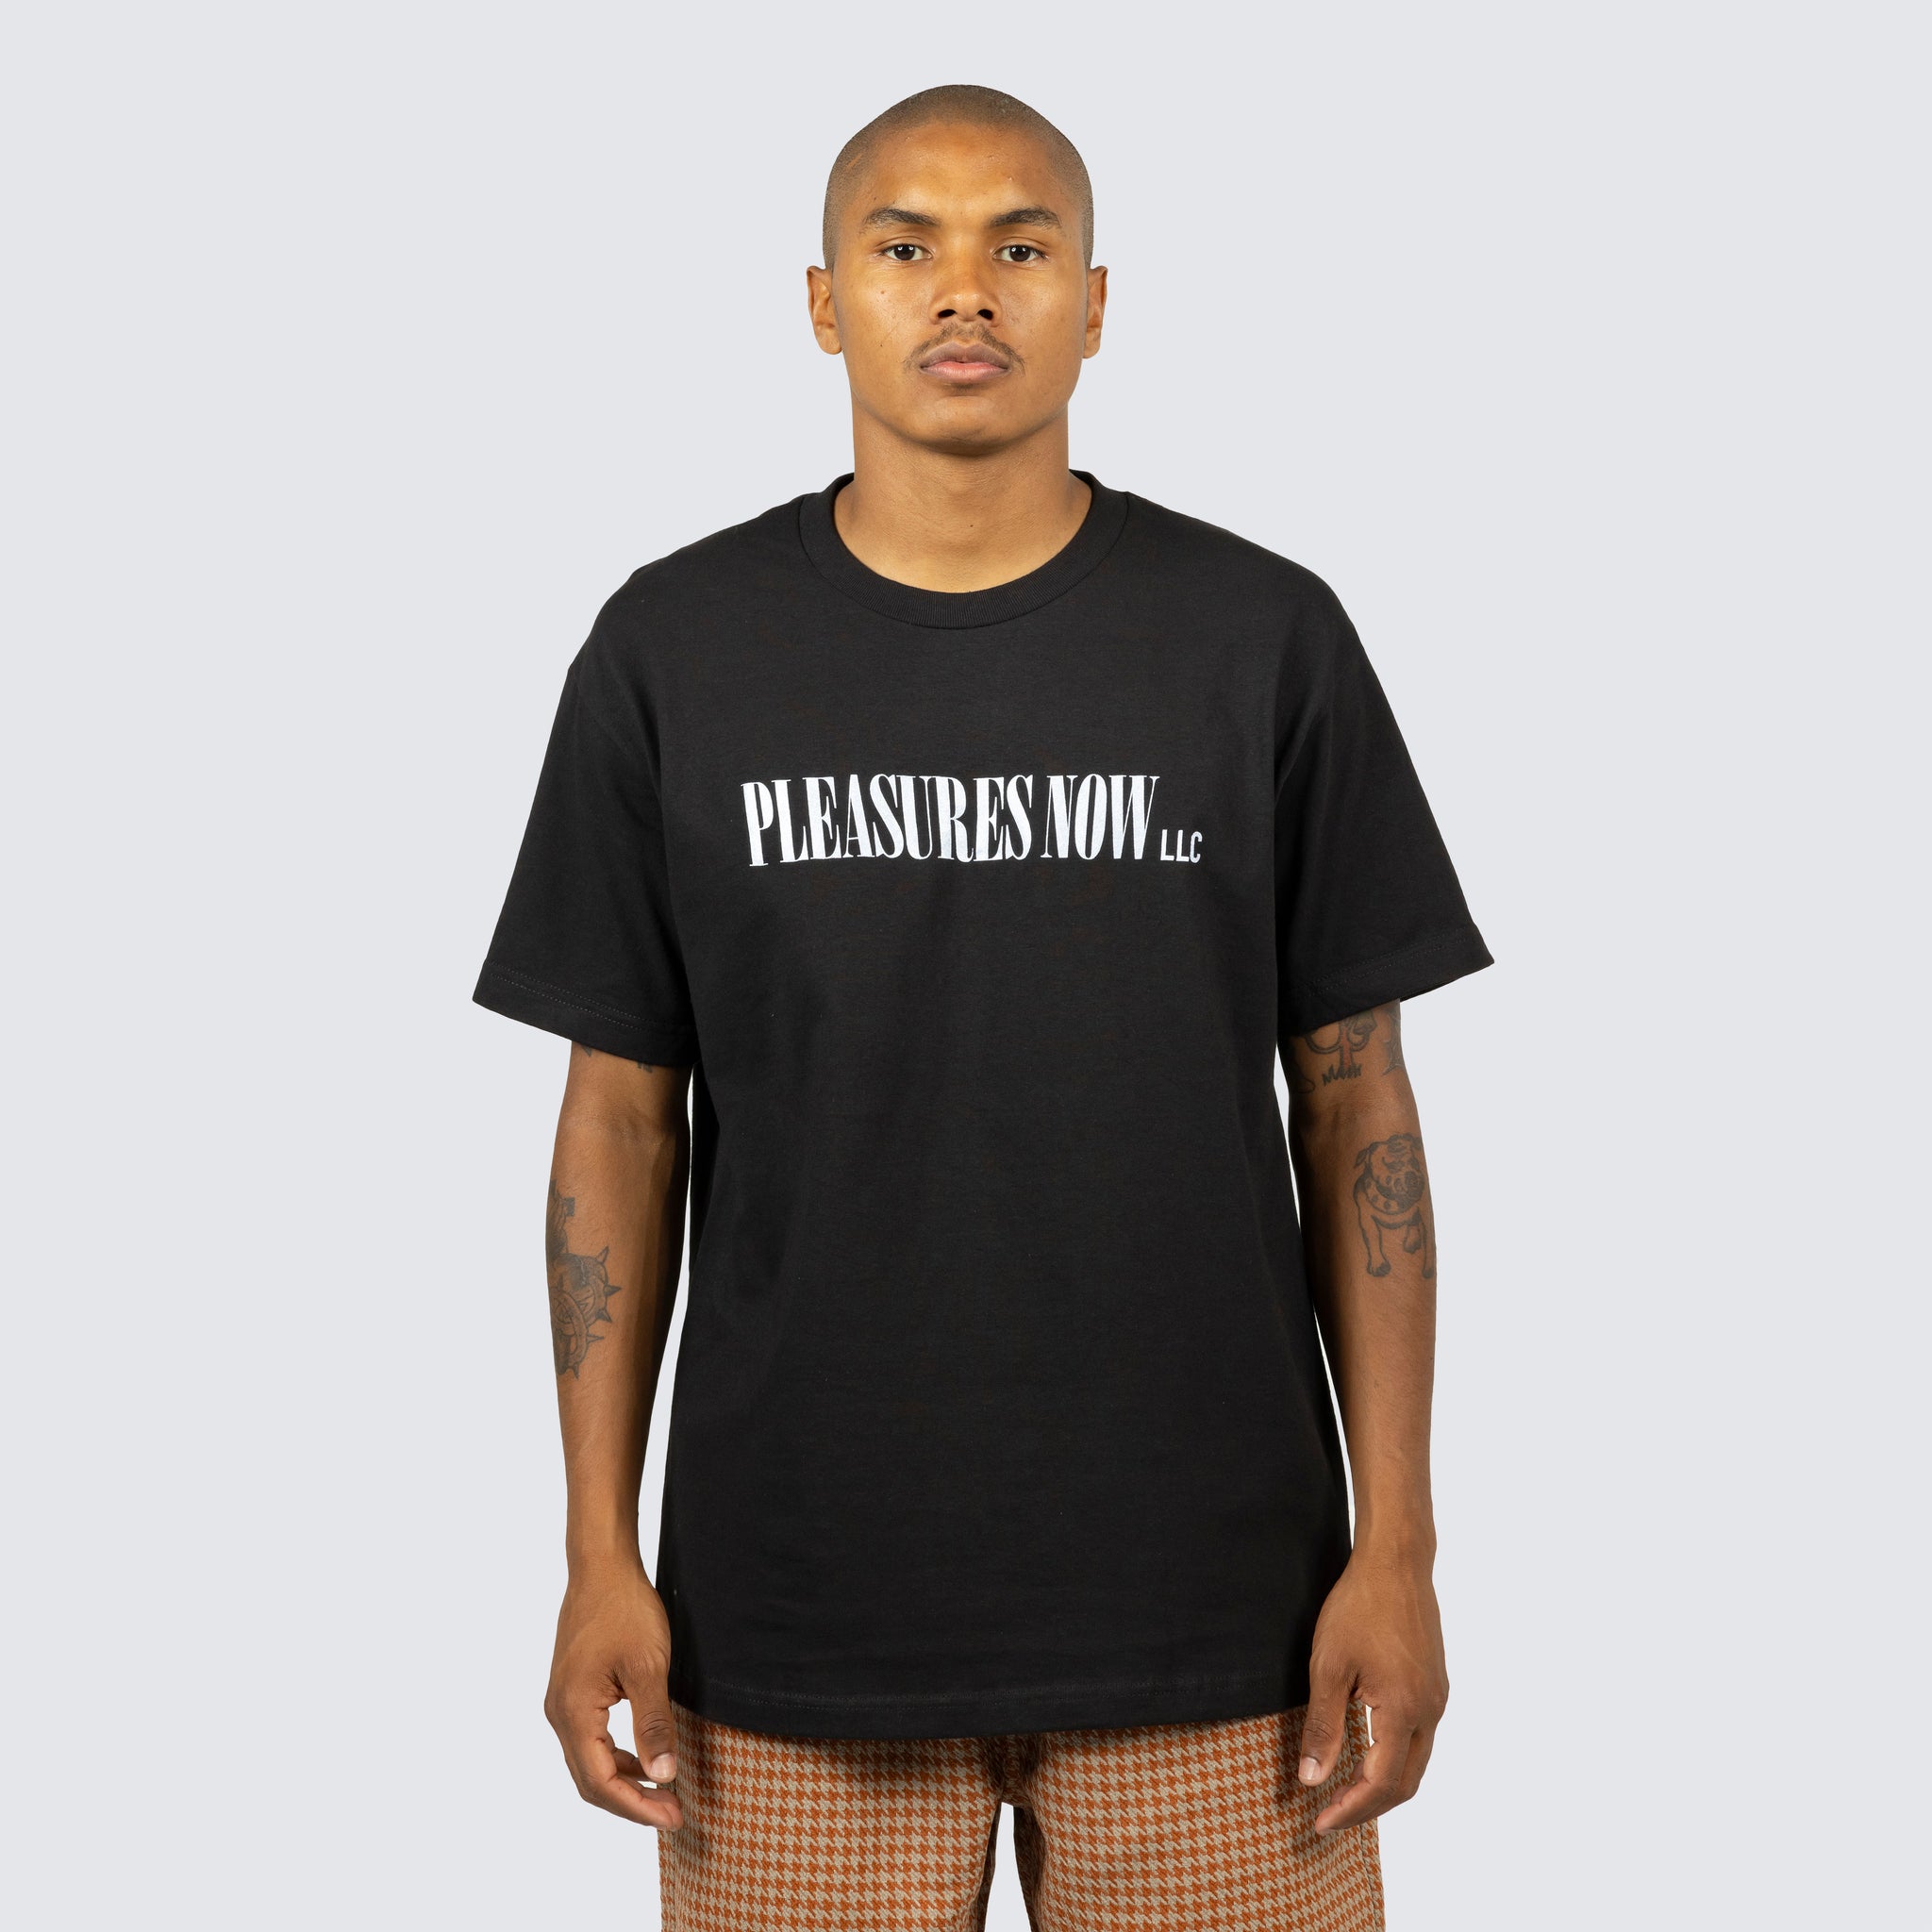 Pleasures LLC T-Shirt